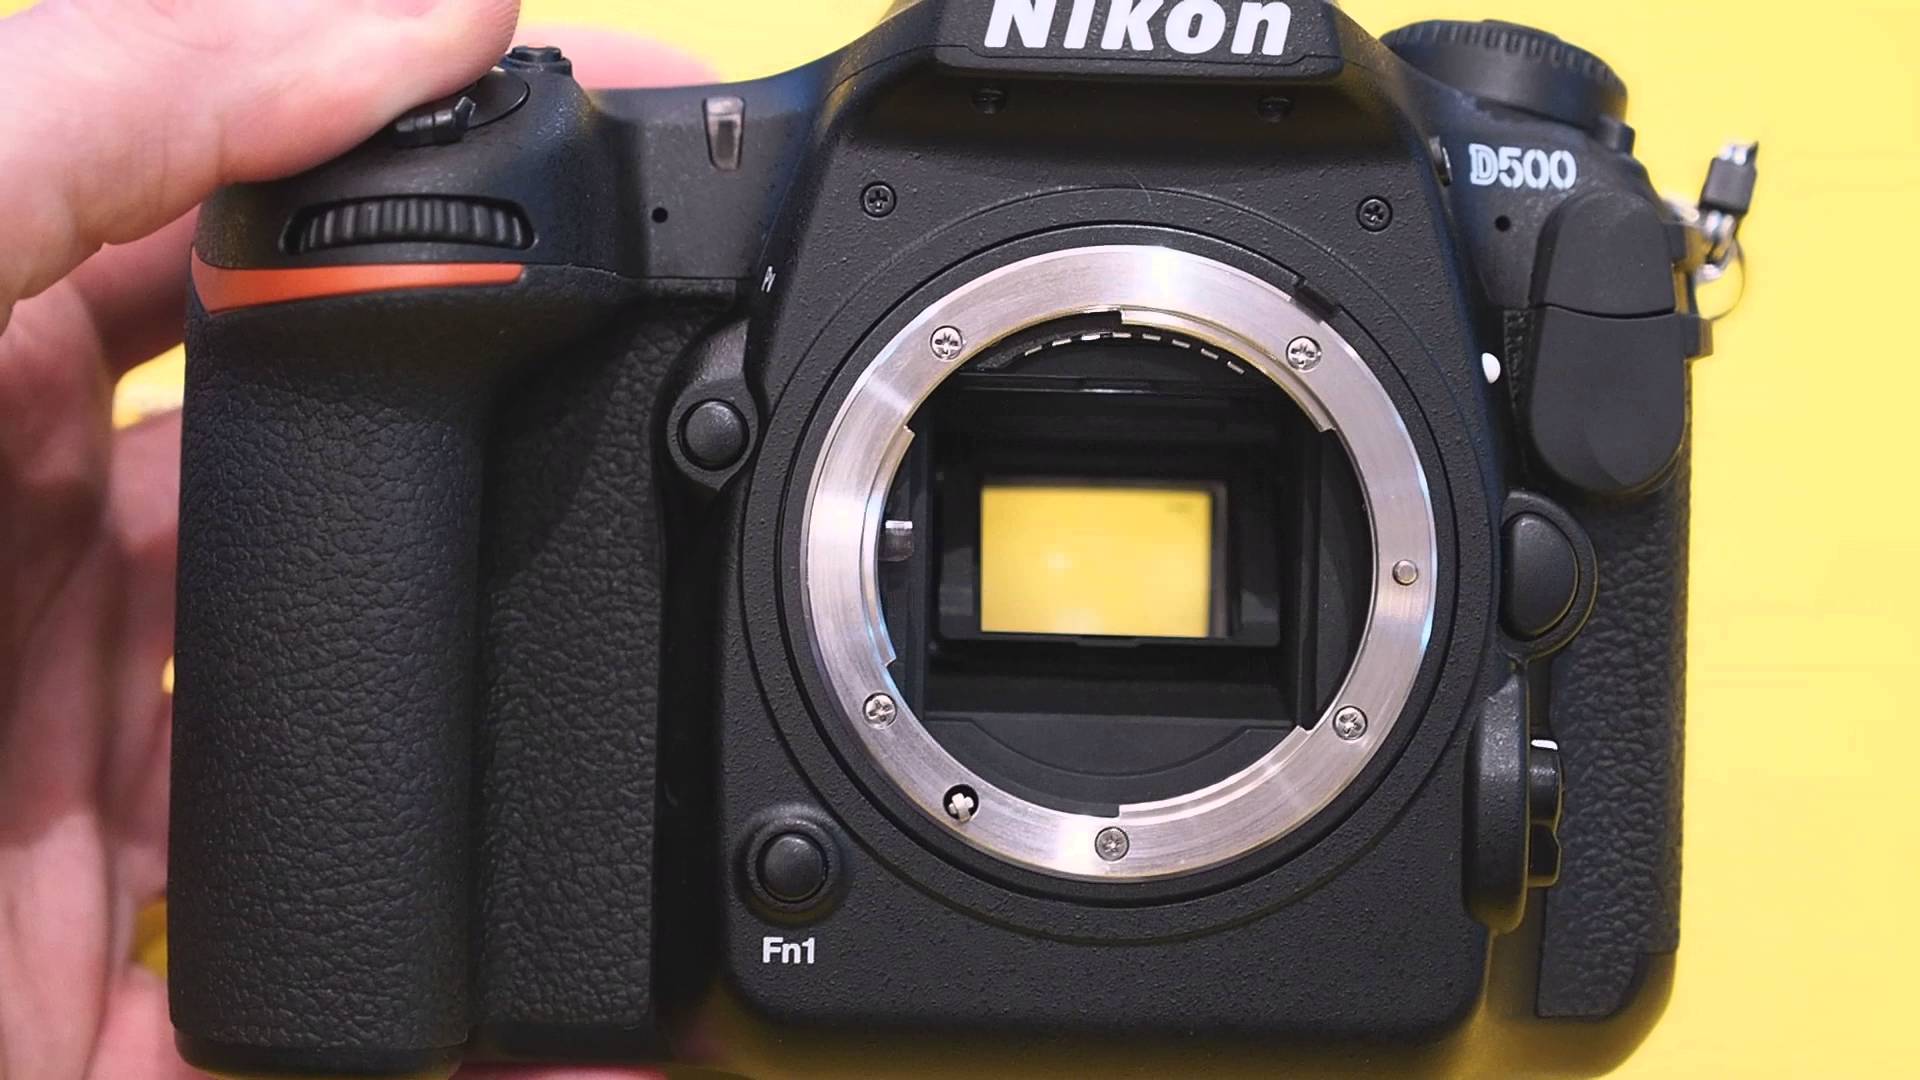 Hot Deal – Refurbished Nikon D500 Body now $1,496.95 at BuyDig !